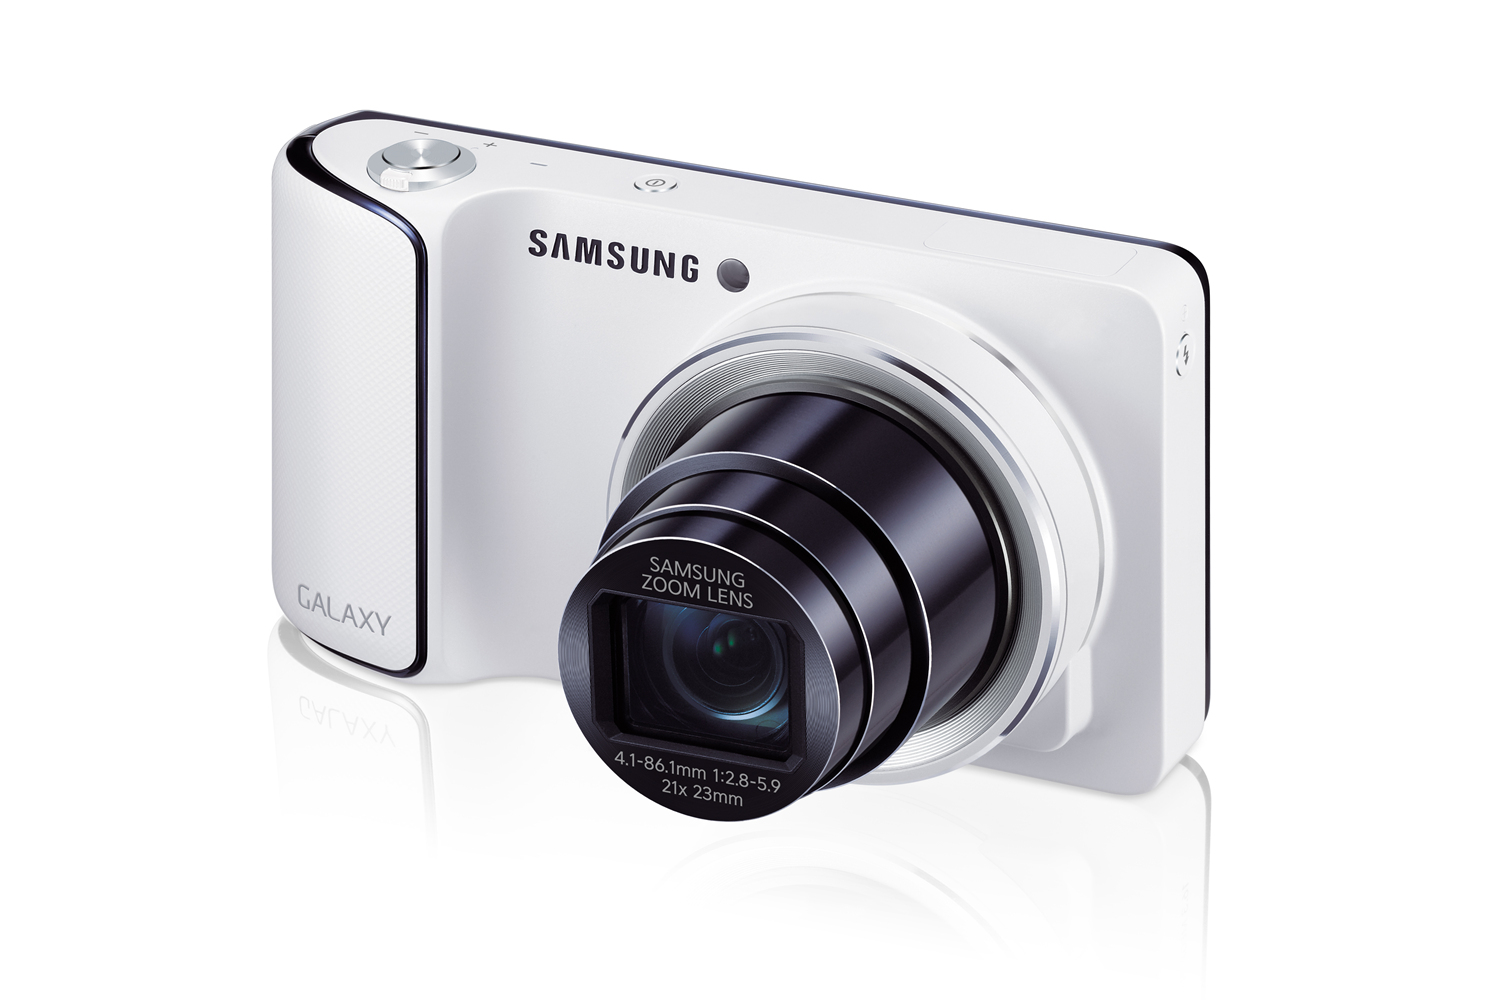 married pace Wonderful Samsung GALAXY camera - Android pe un aparat foto & video : Gadget.ro –  Hi-Tech Lifestyle